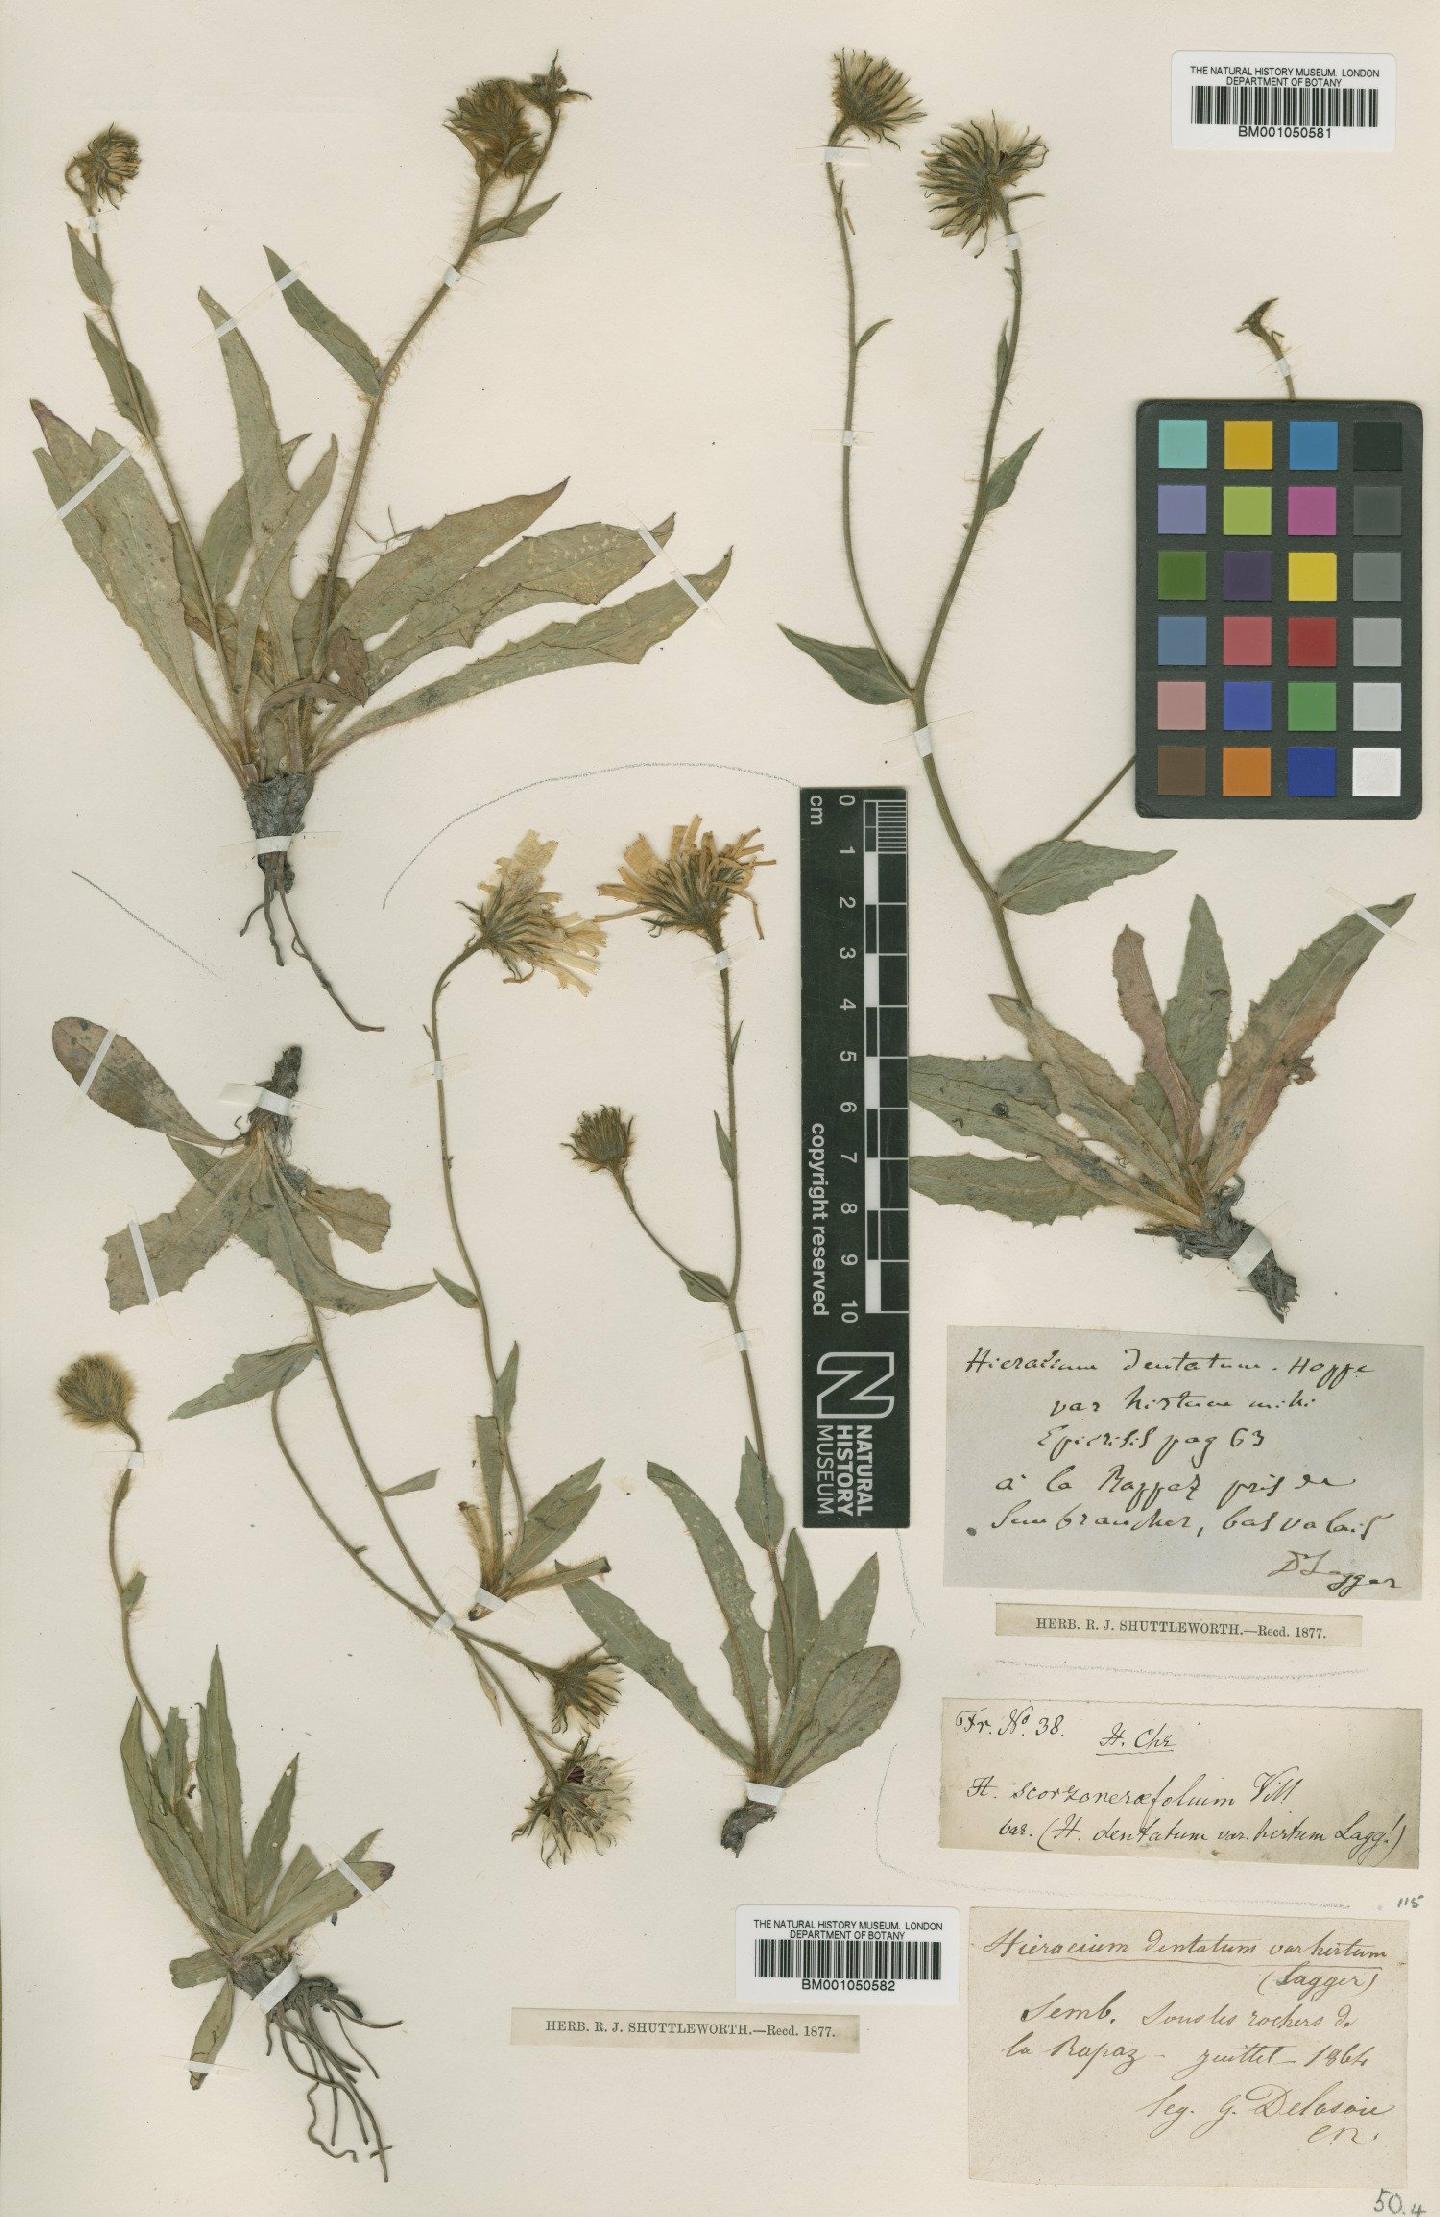 To NHMUK collection (Hieracium leucophaeum subsp. gremlii (Arv.-Touv.) Zahn; TYPE; NHMUK:ecatalogue:2396225)